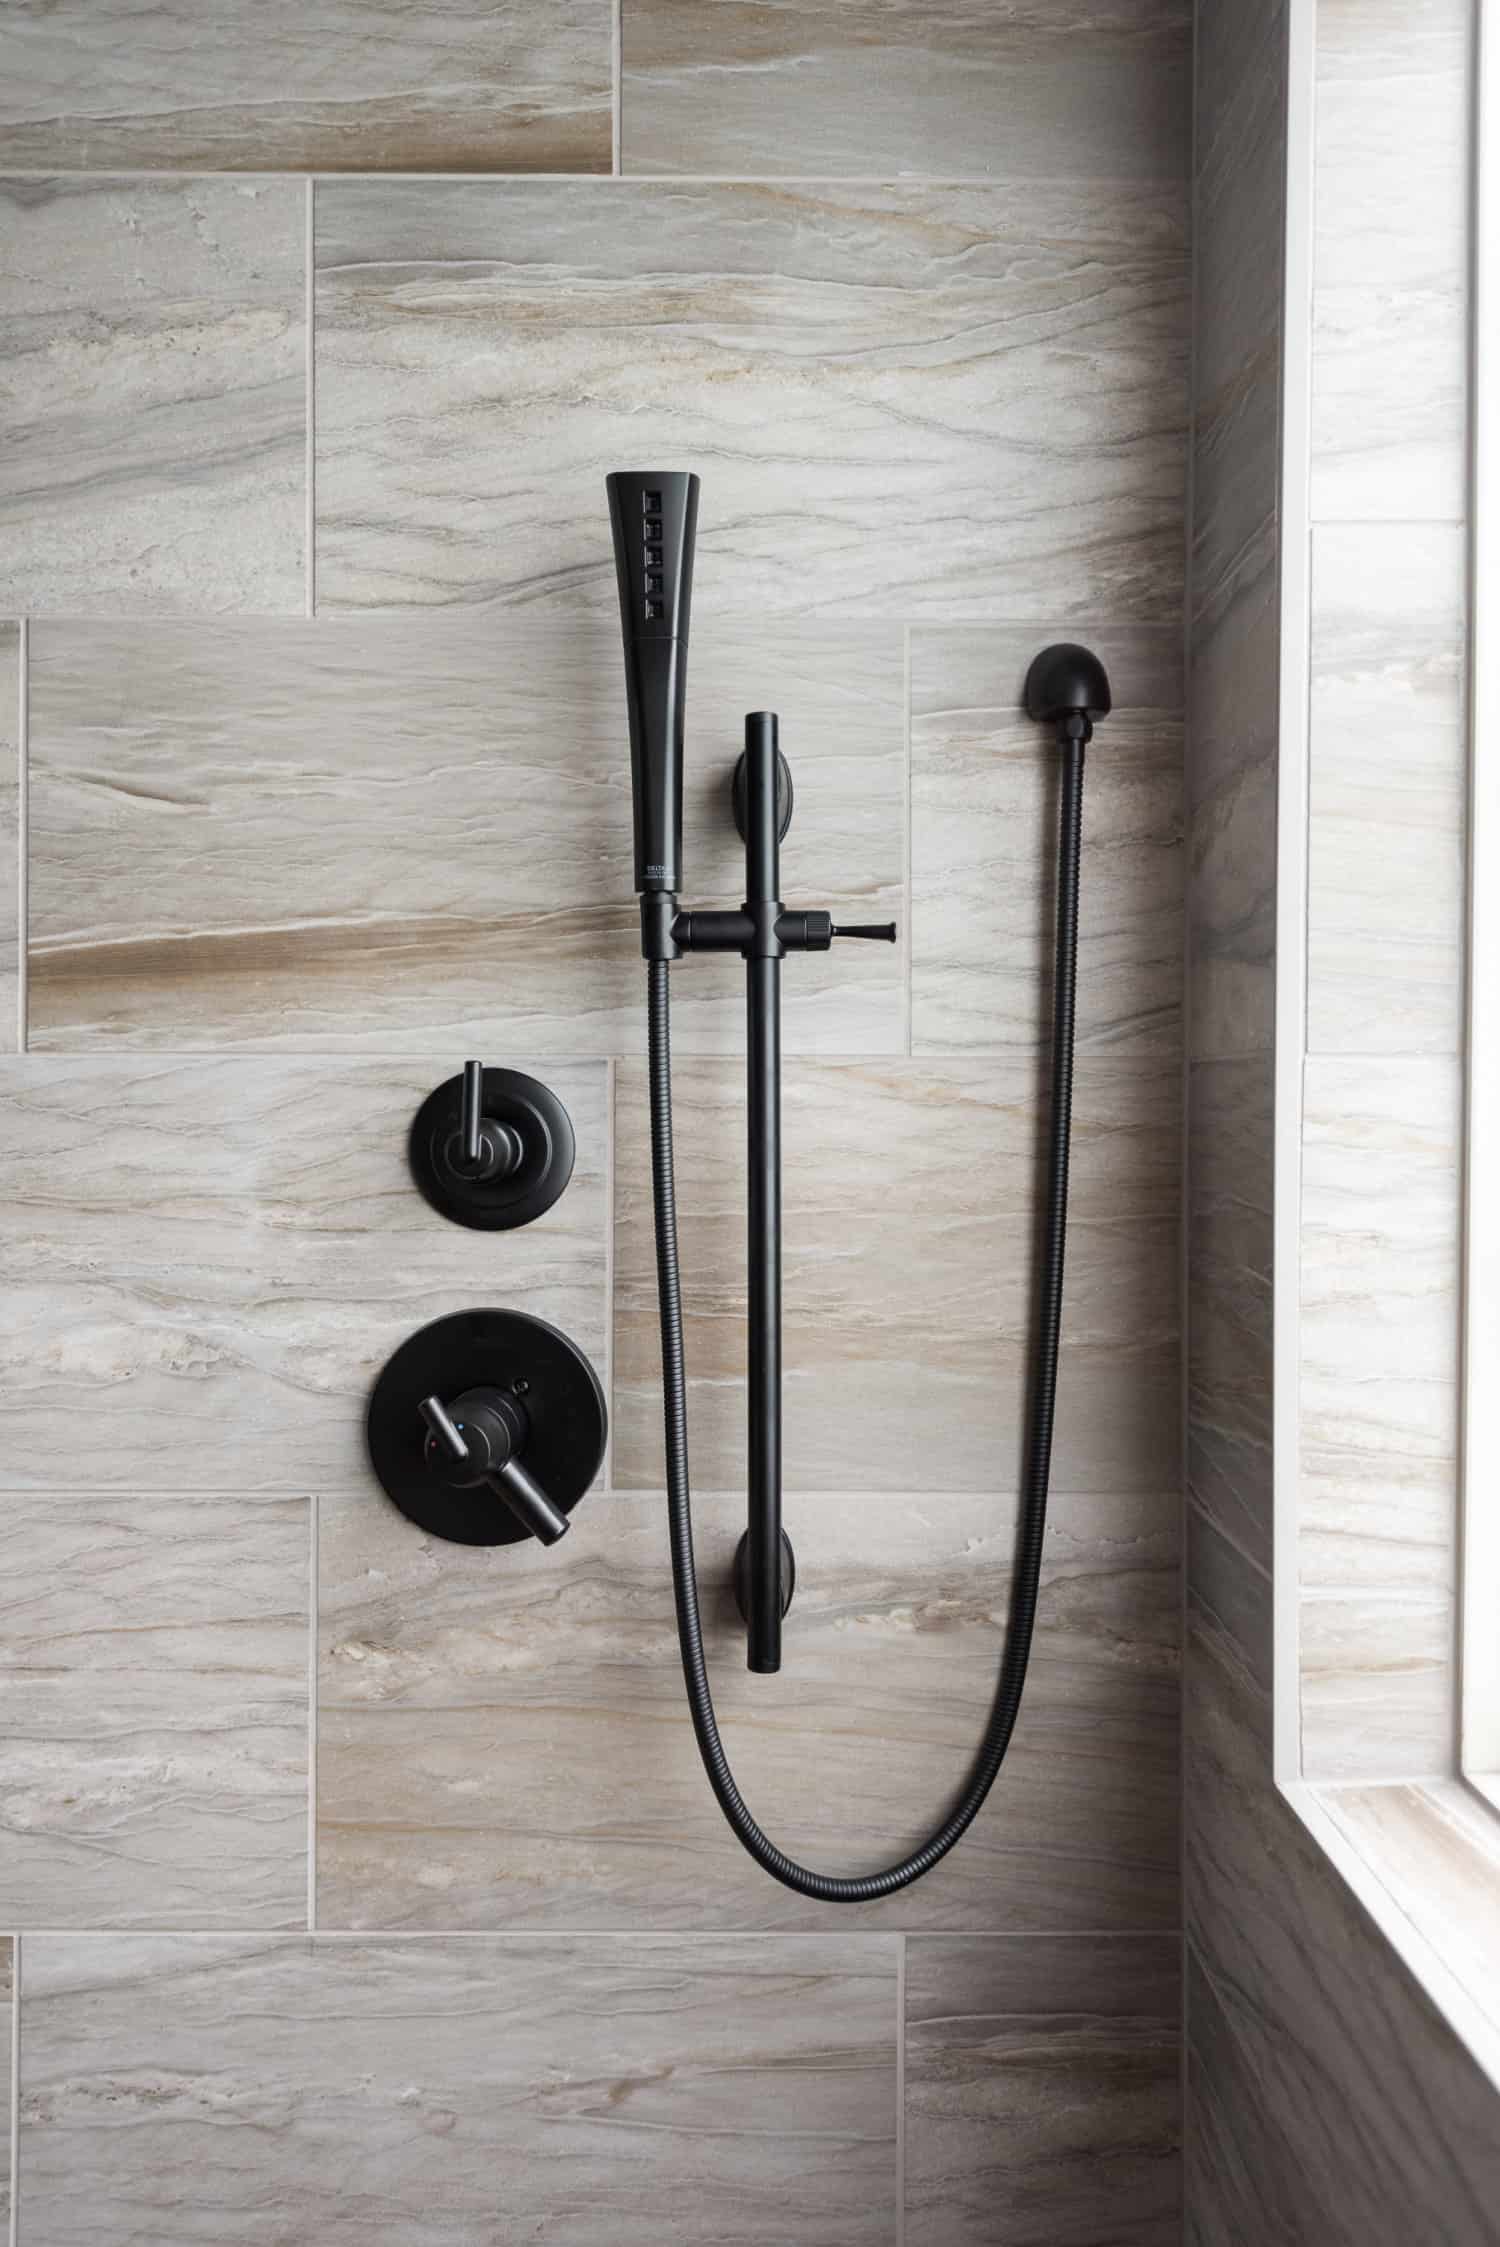 Nicholas Design Build | A modern bathroom with a black shower head and hand shower.